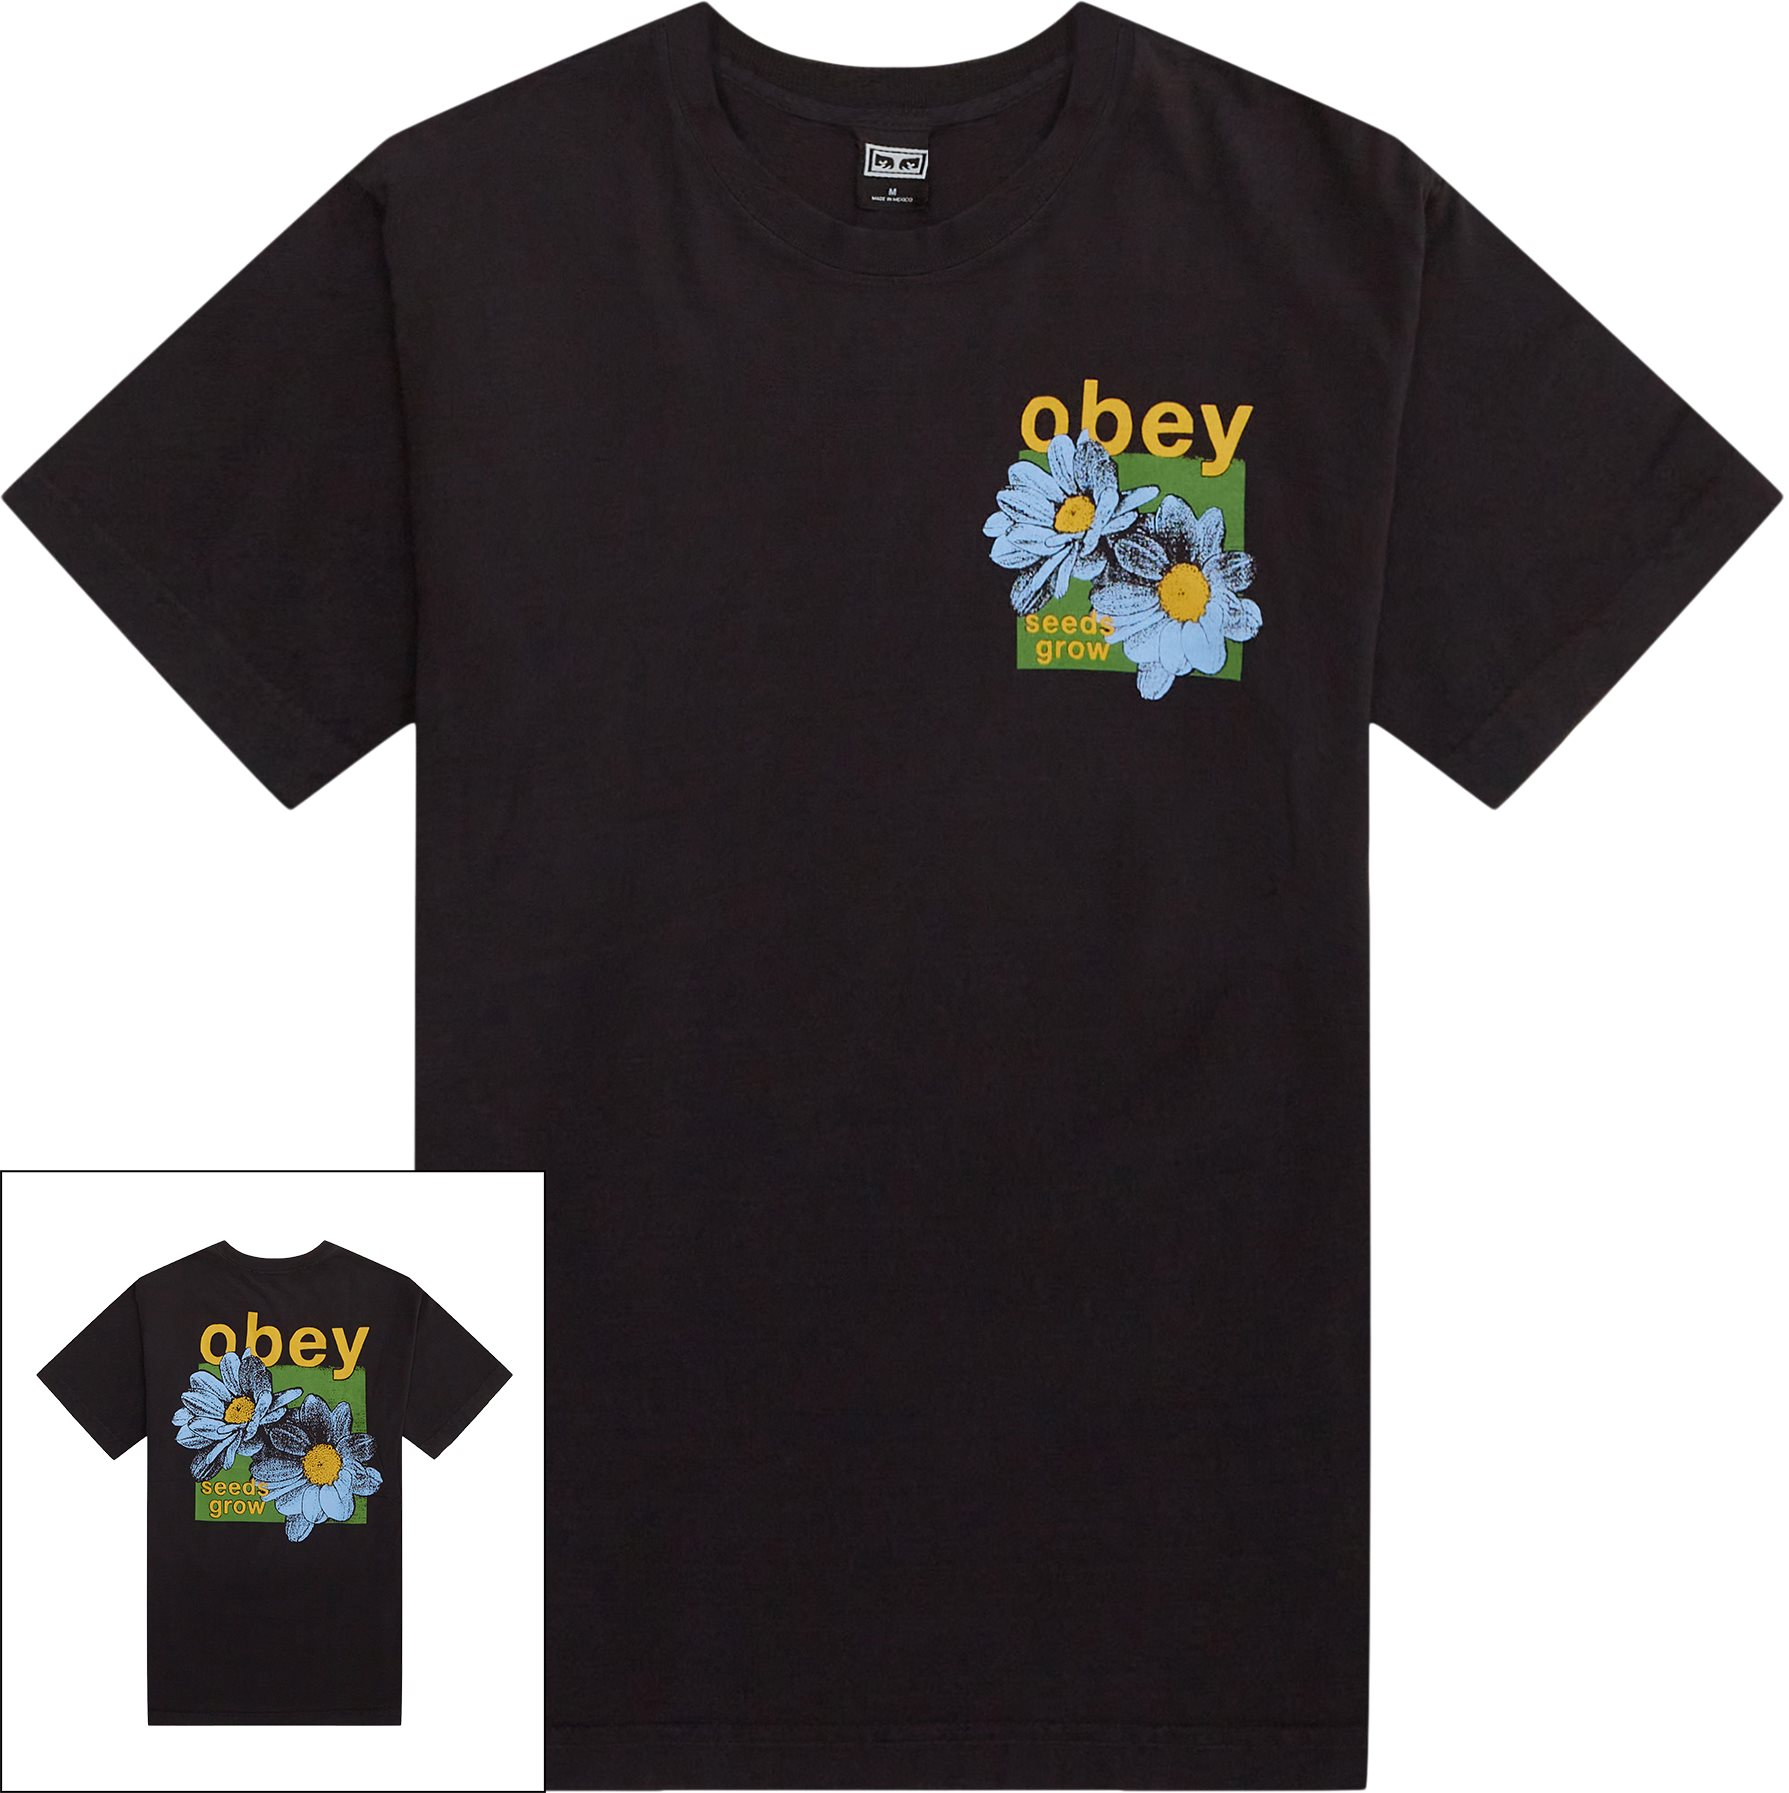 Obey T-shirts OBEY SEEDS GROW 166913705 Svart